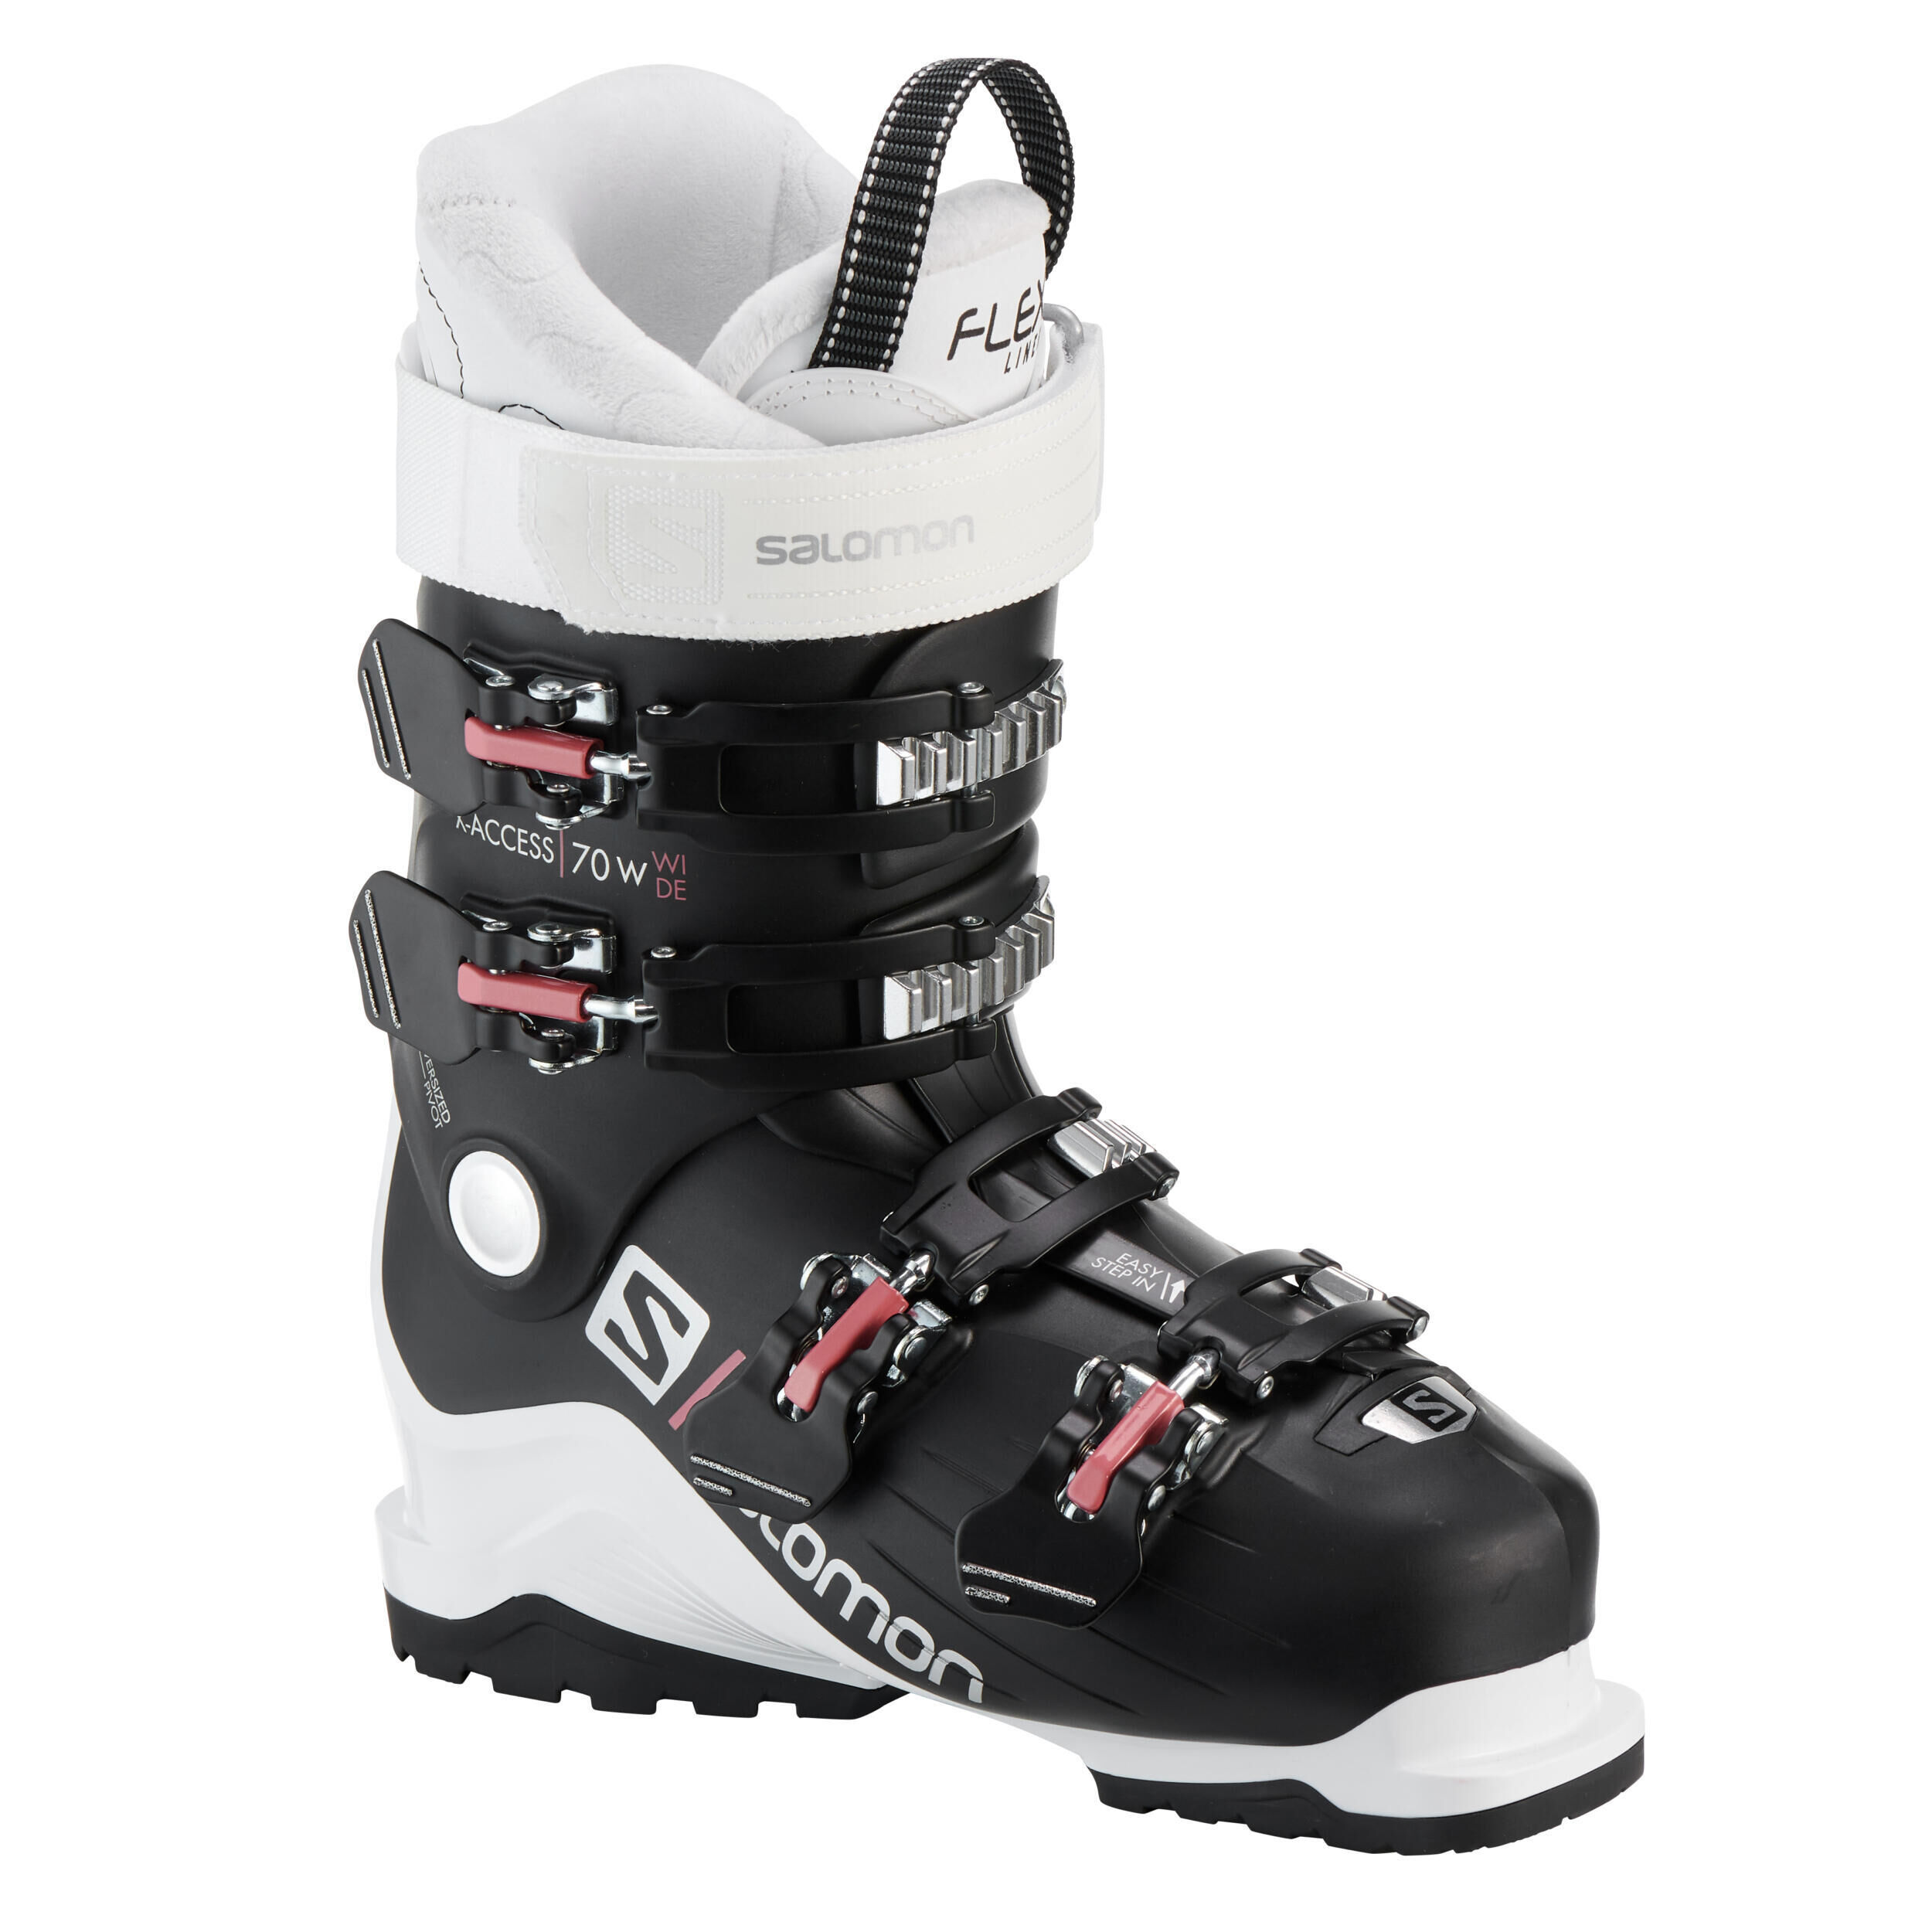 SALOMON Refurbished Womens Ski Boots - 23-23.5cm - B Grade